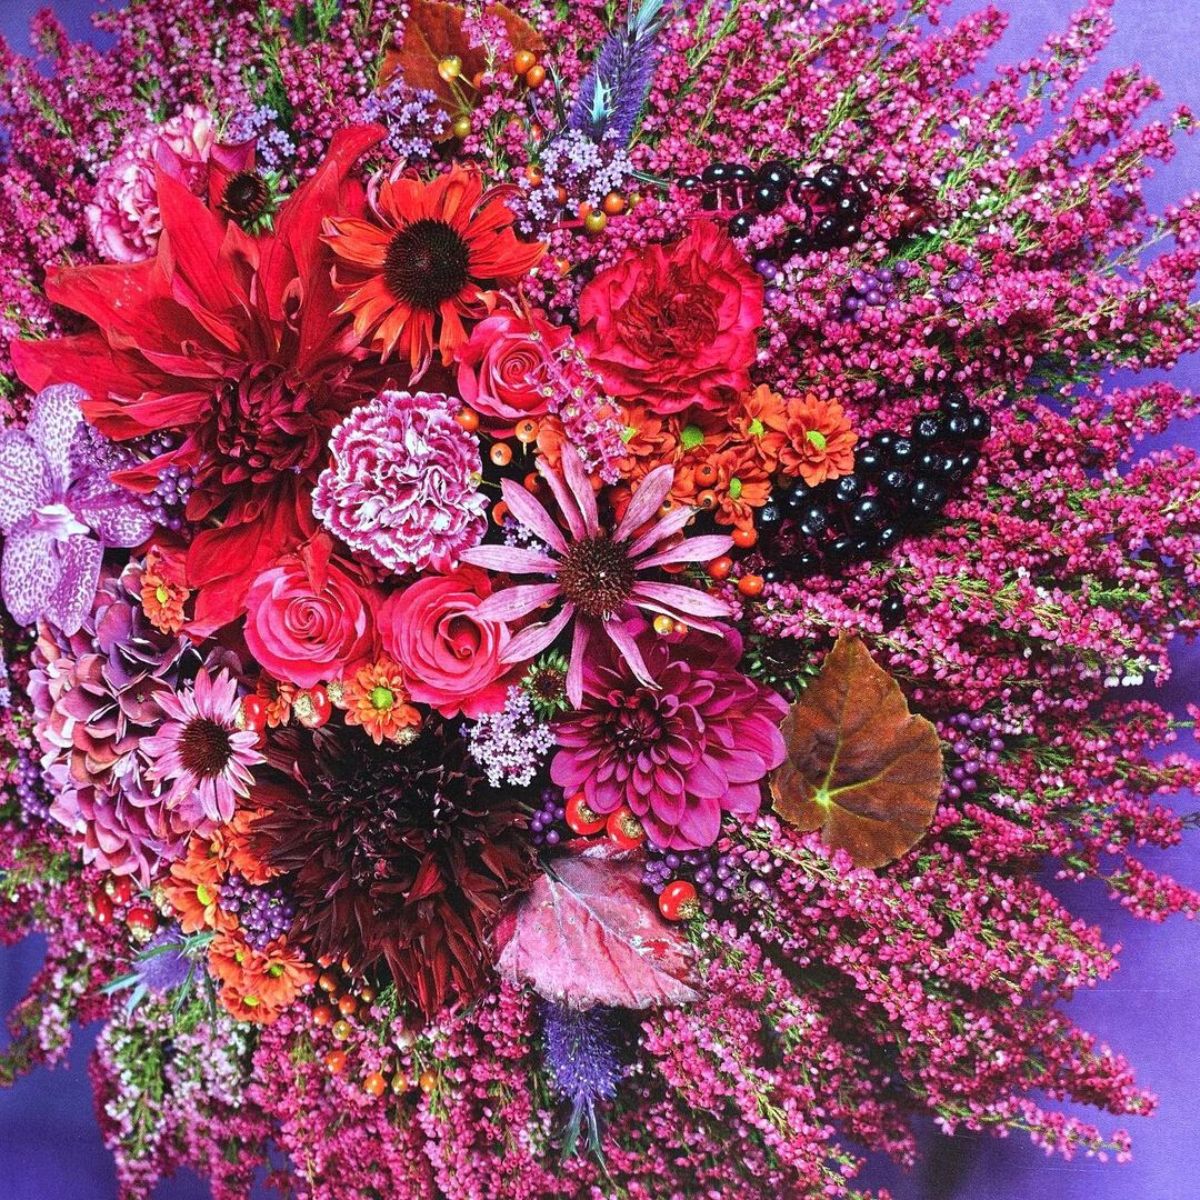 Floral designs by Per Benjamin